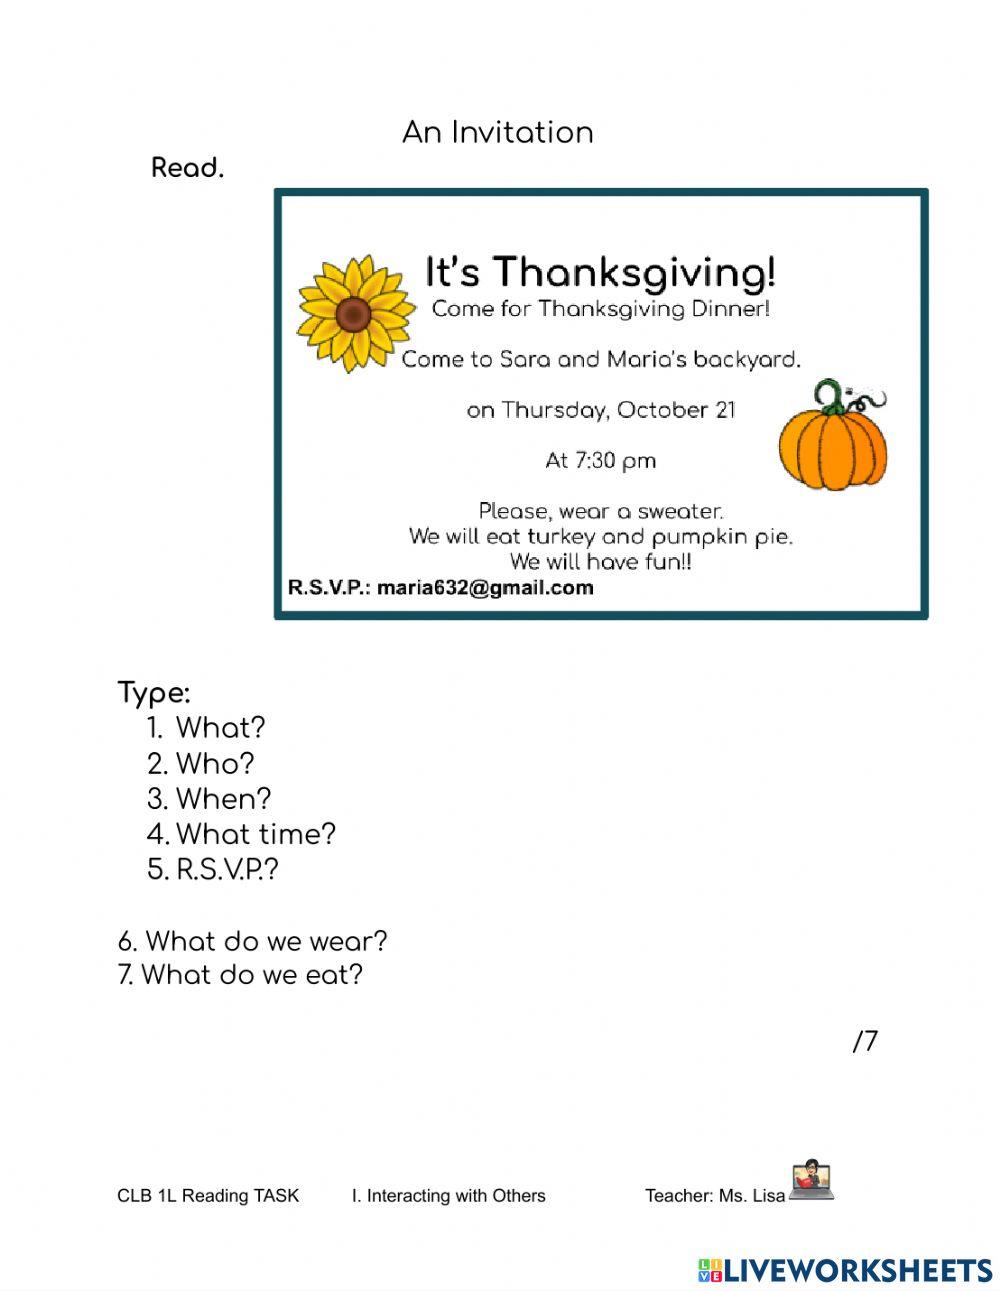 An Invitation: Thanksgiving